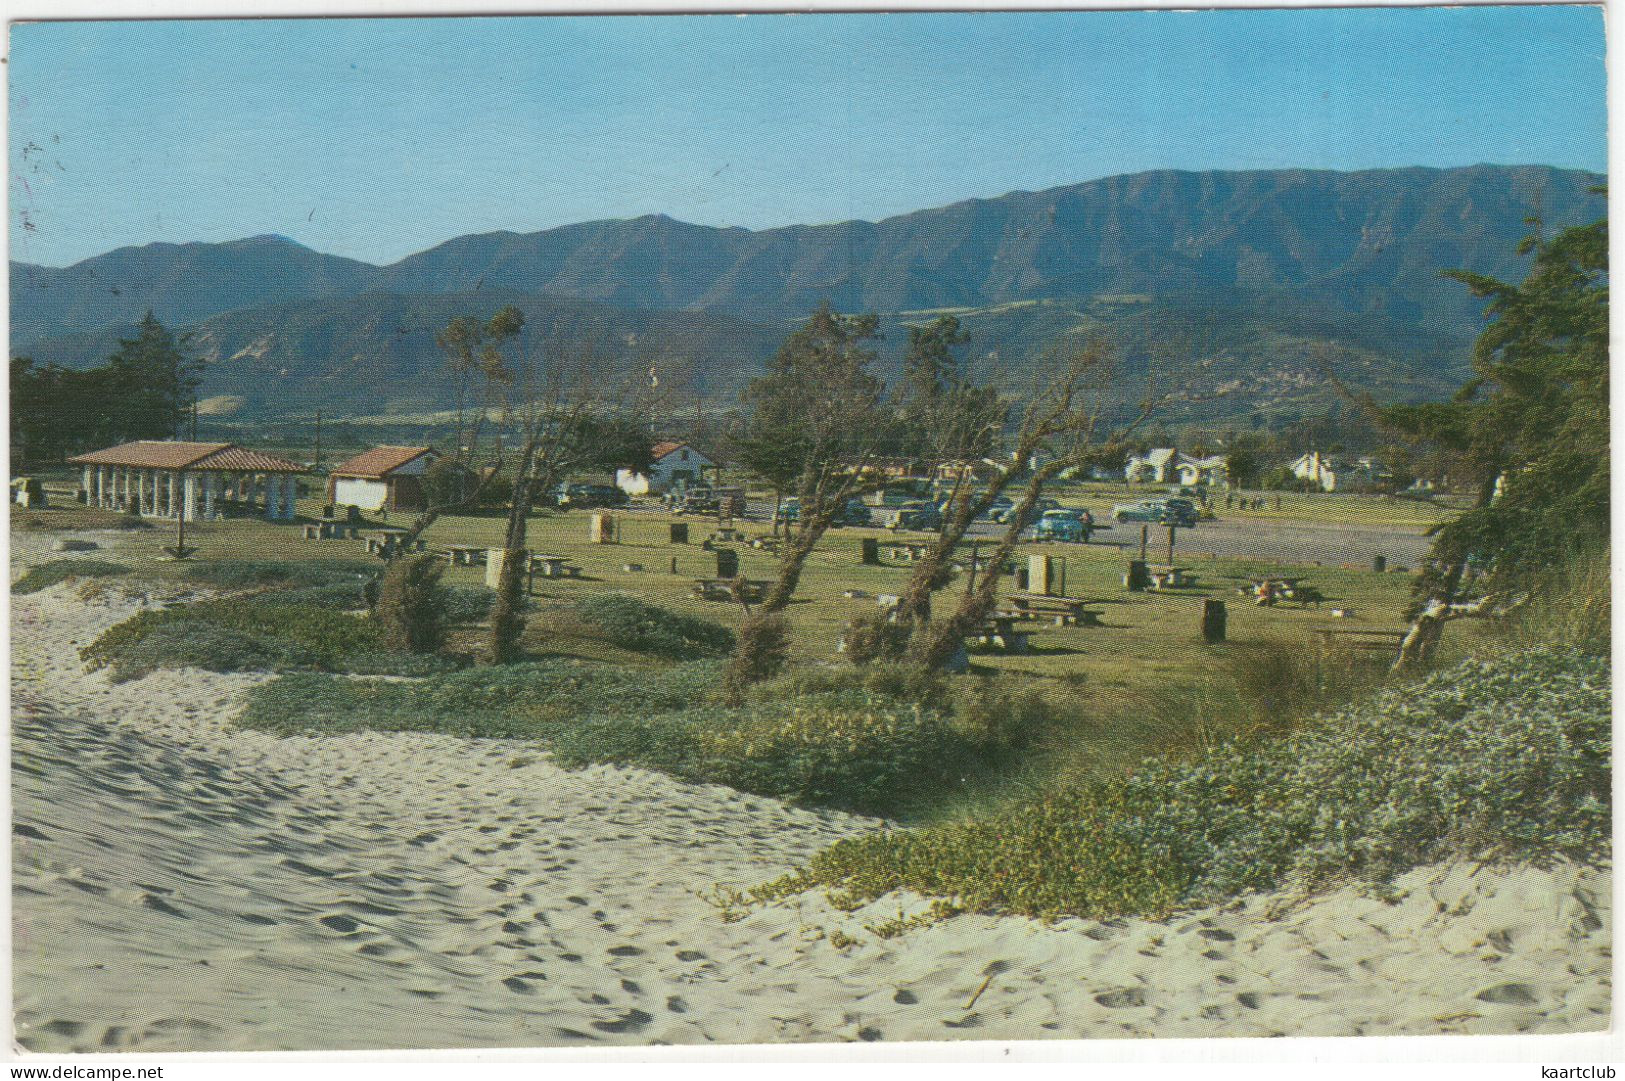 Carpinteria Beach State Park - (CA, USA) - 1960 - Santa Barbara